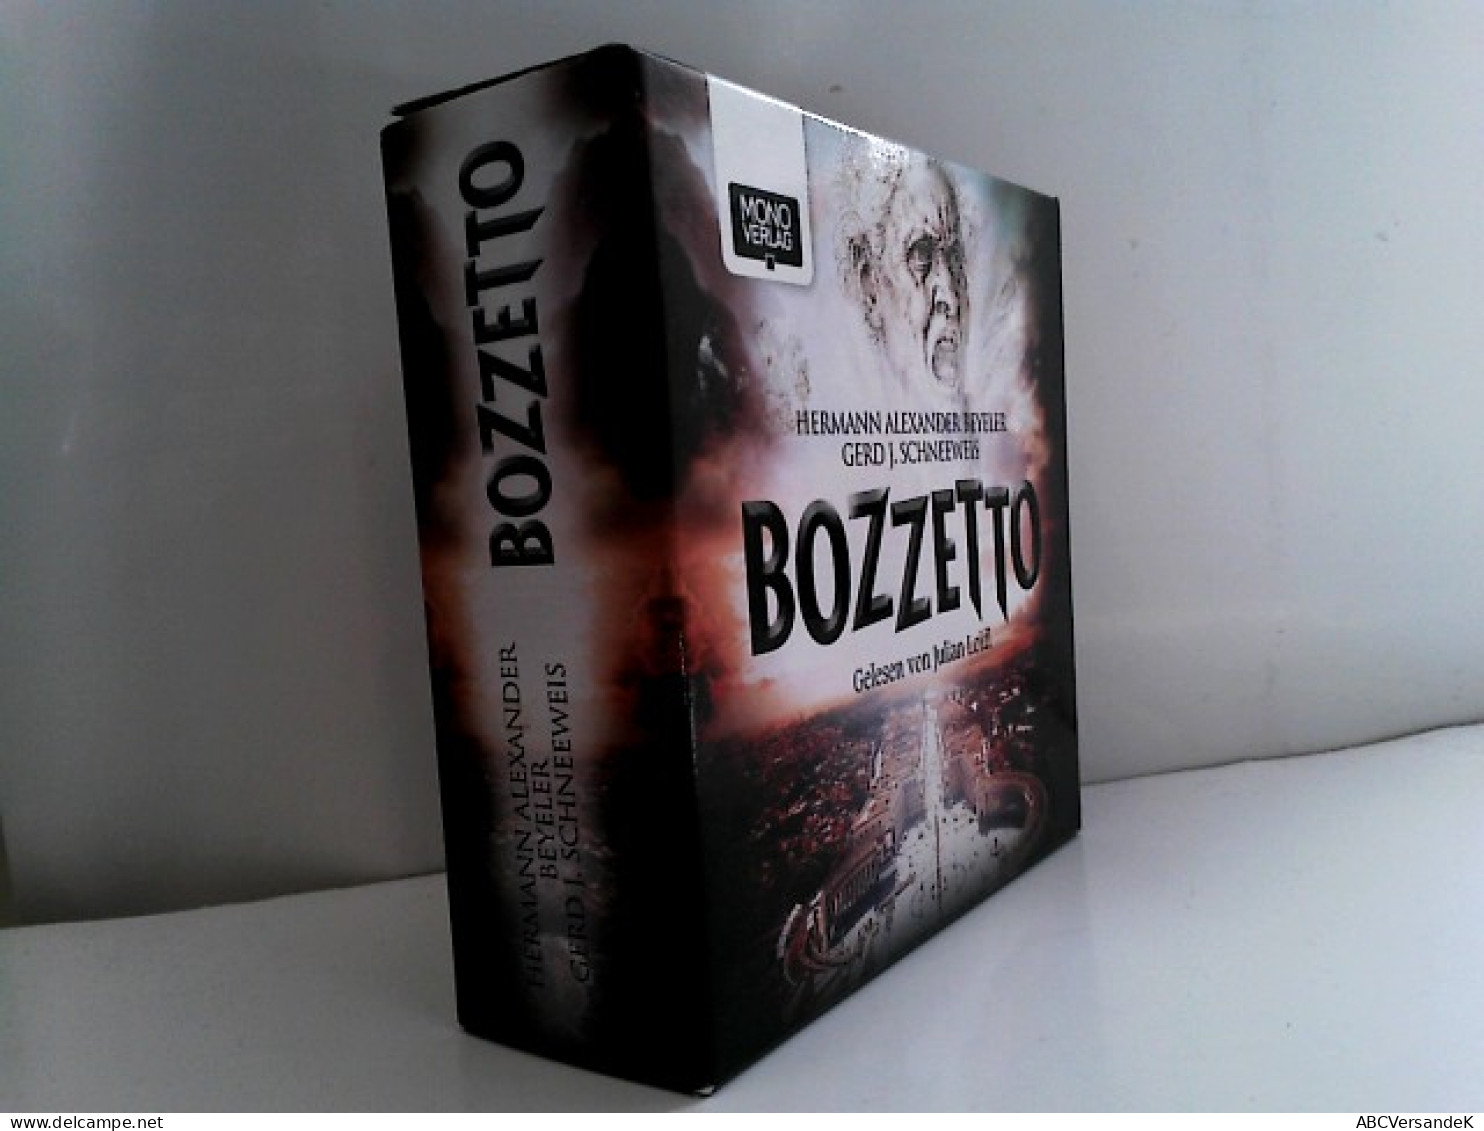 Bozzetto - CD